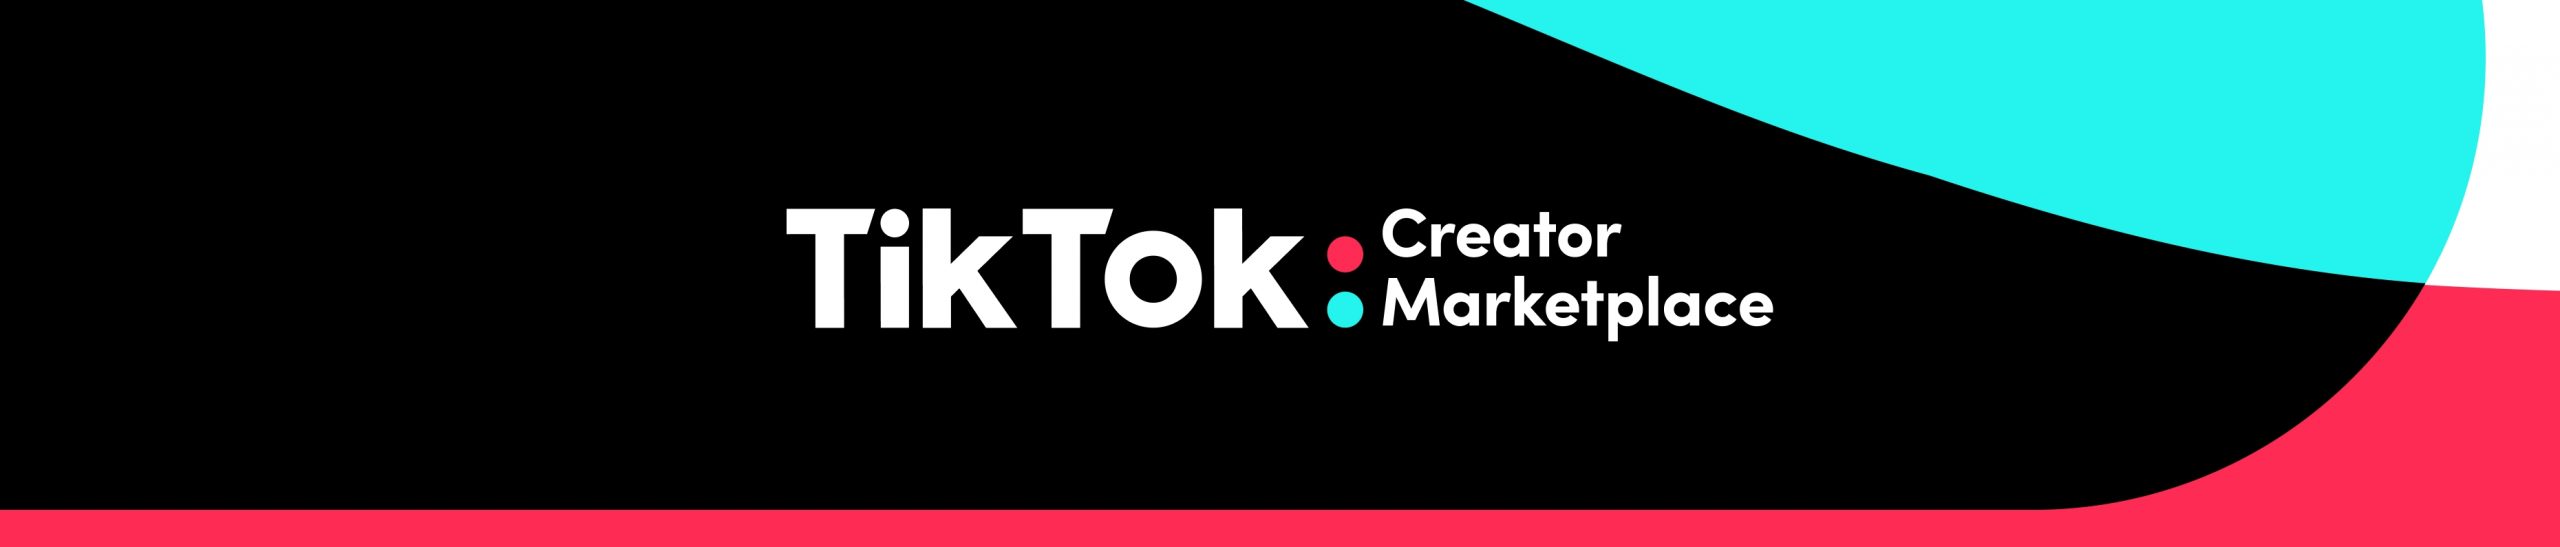 Watch: TikTok Creator Marketplace 101